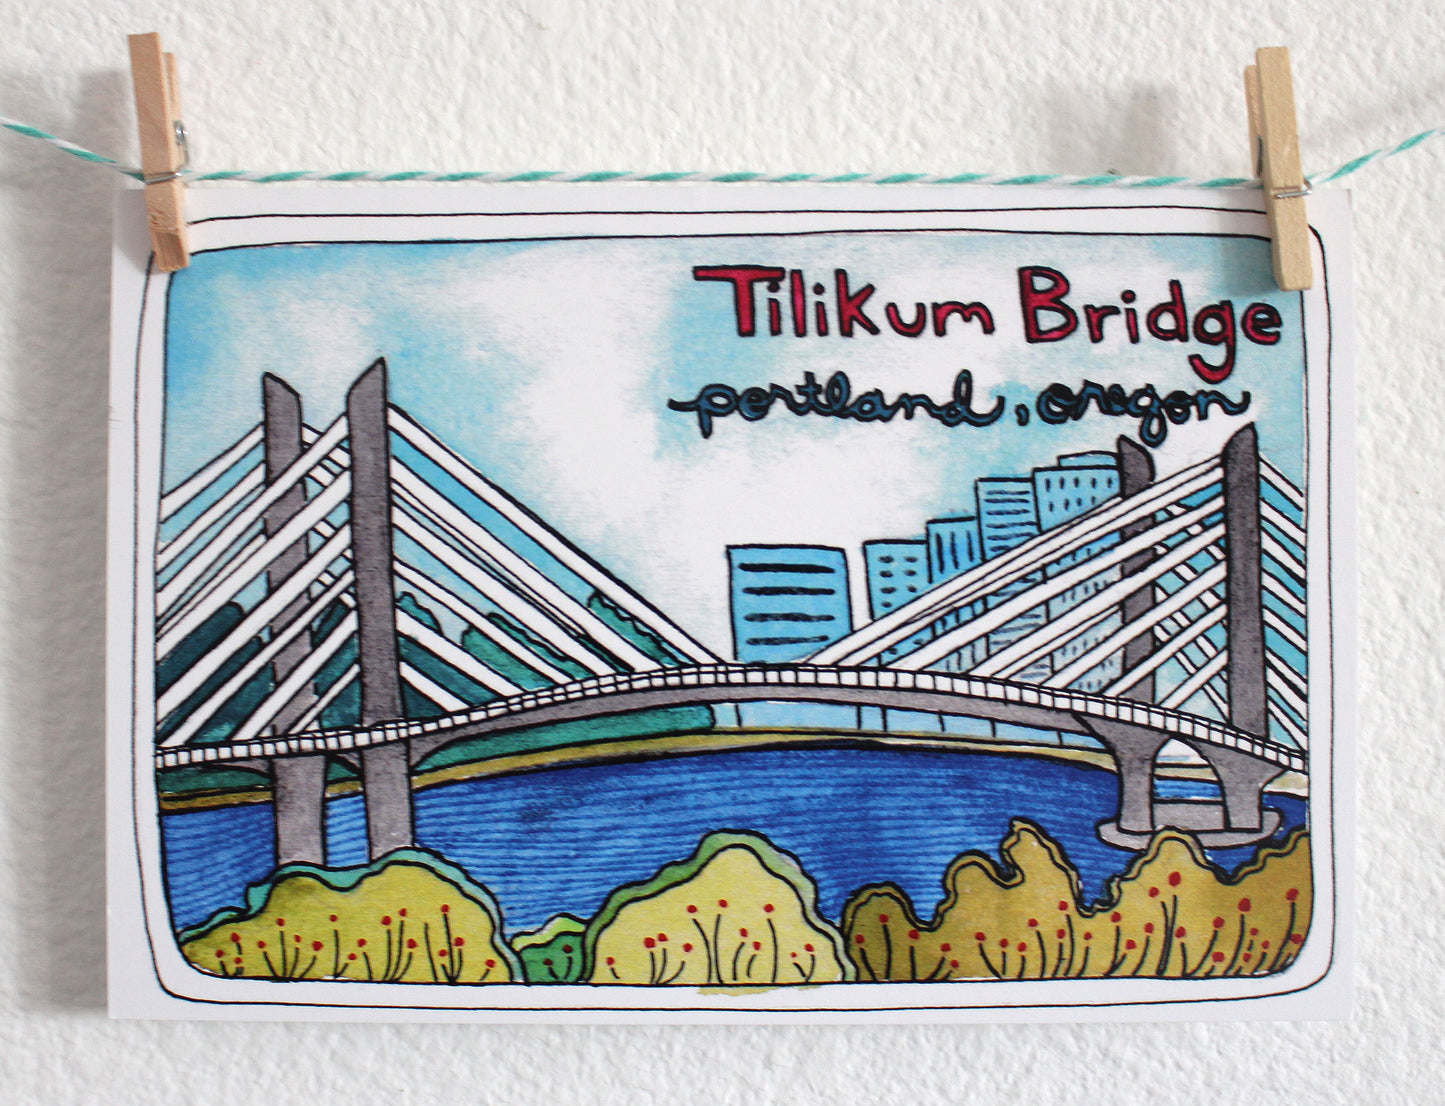 Tilikum Bridge